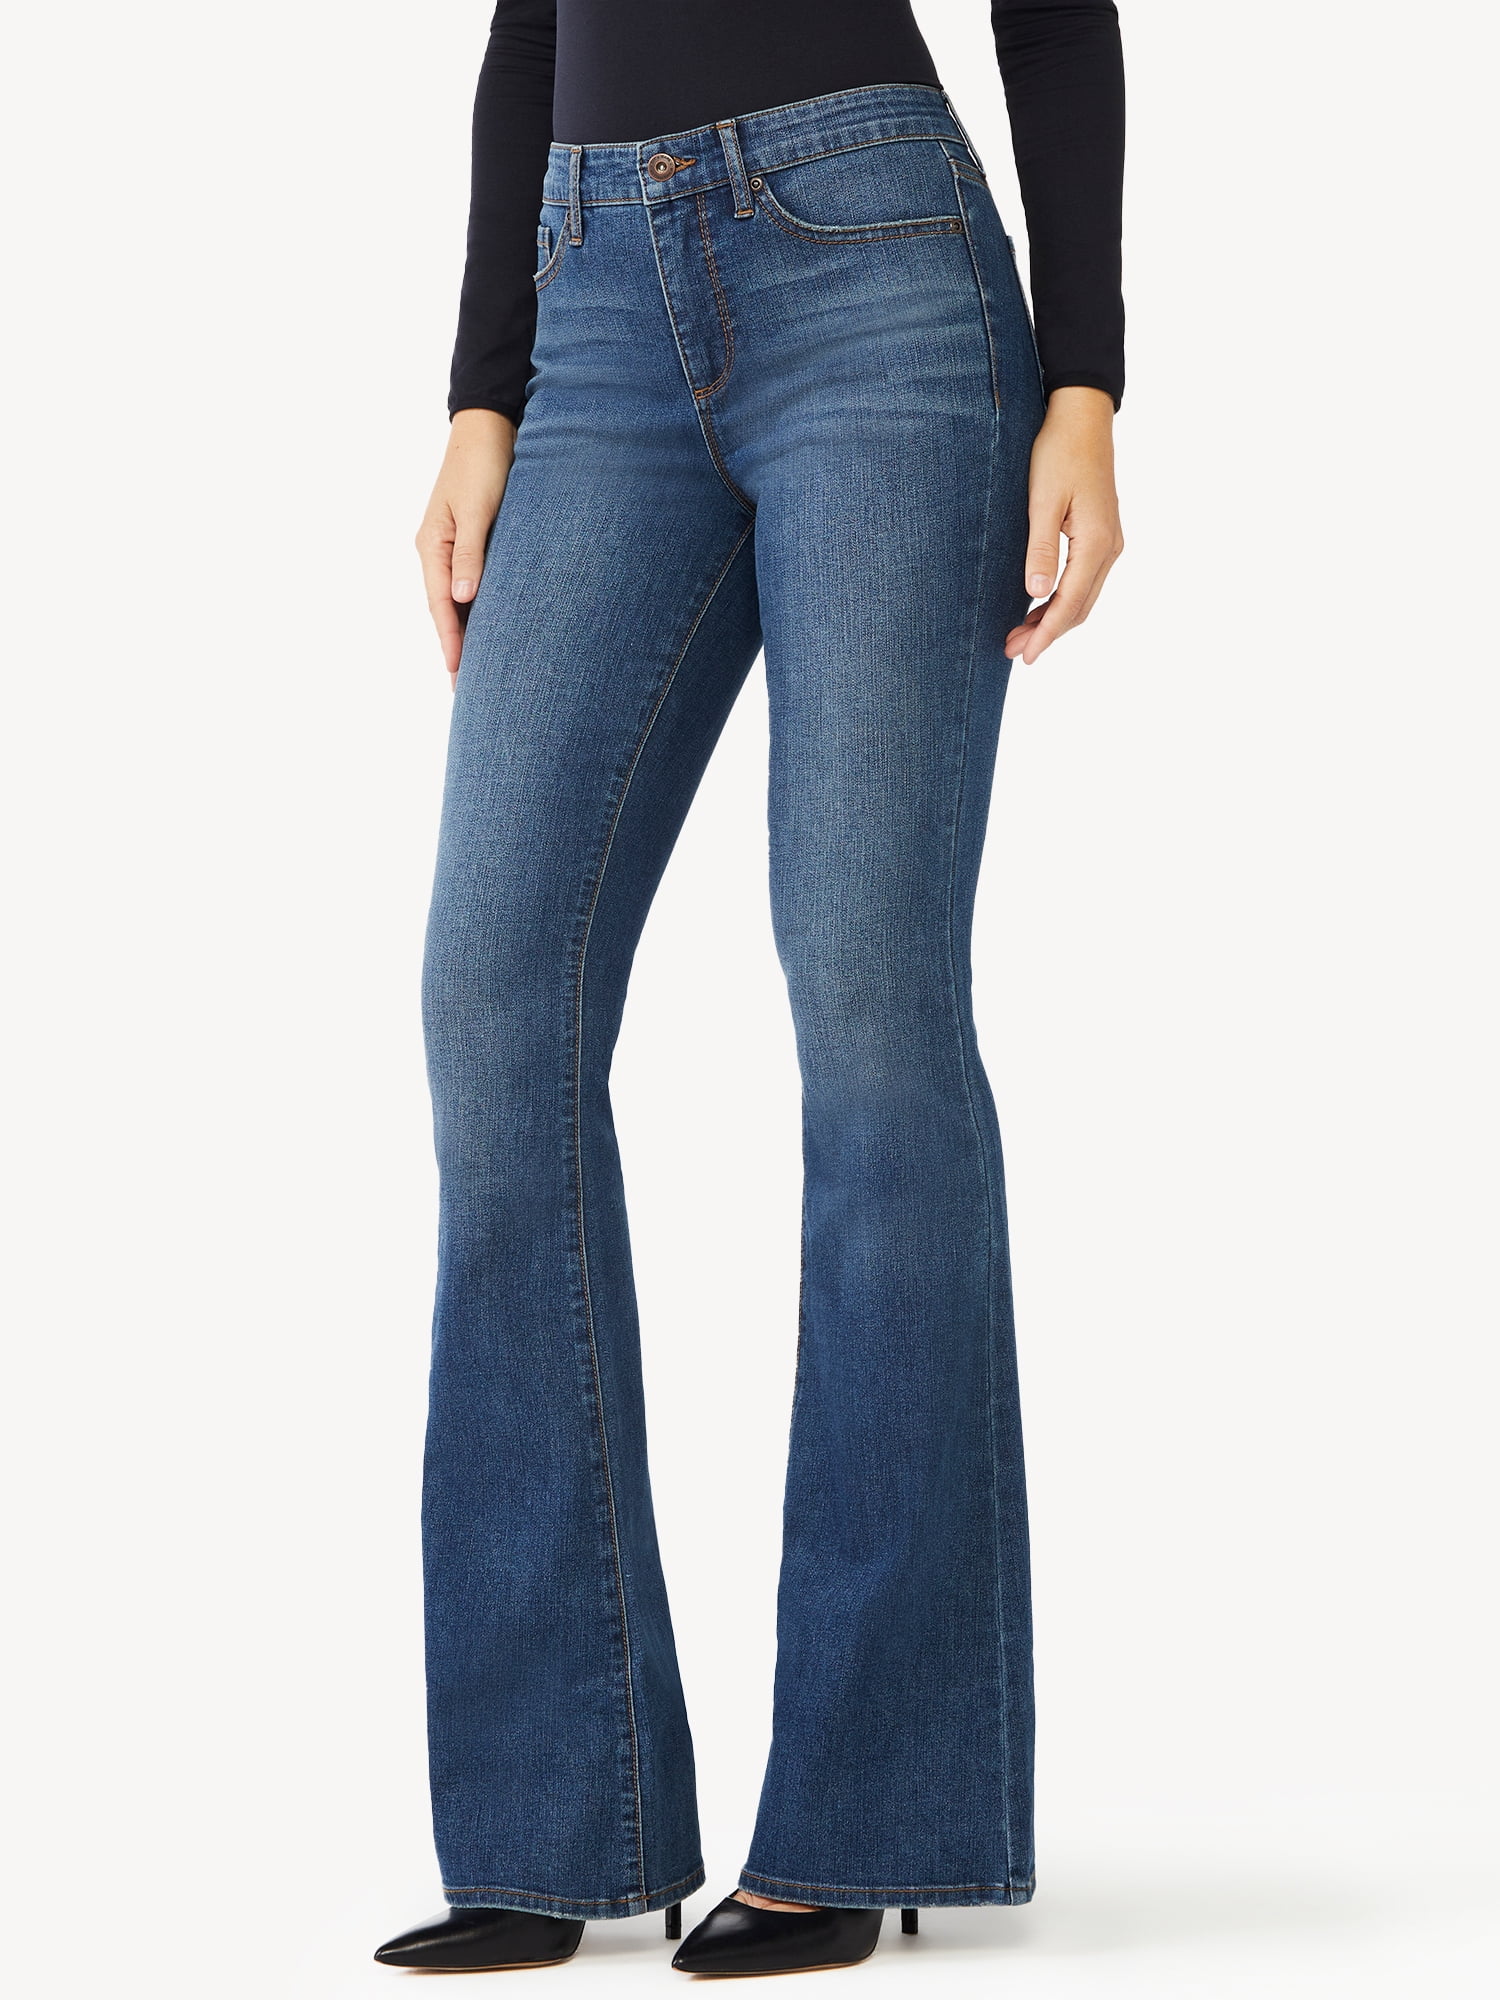 Sofia Jeans Women's Melisa Flare High Rise Zip Fly Jeans - Walmart.com